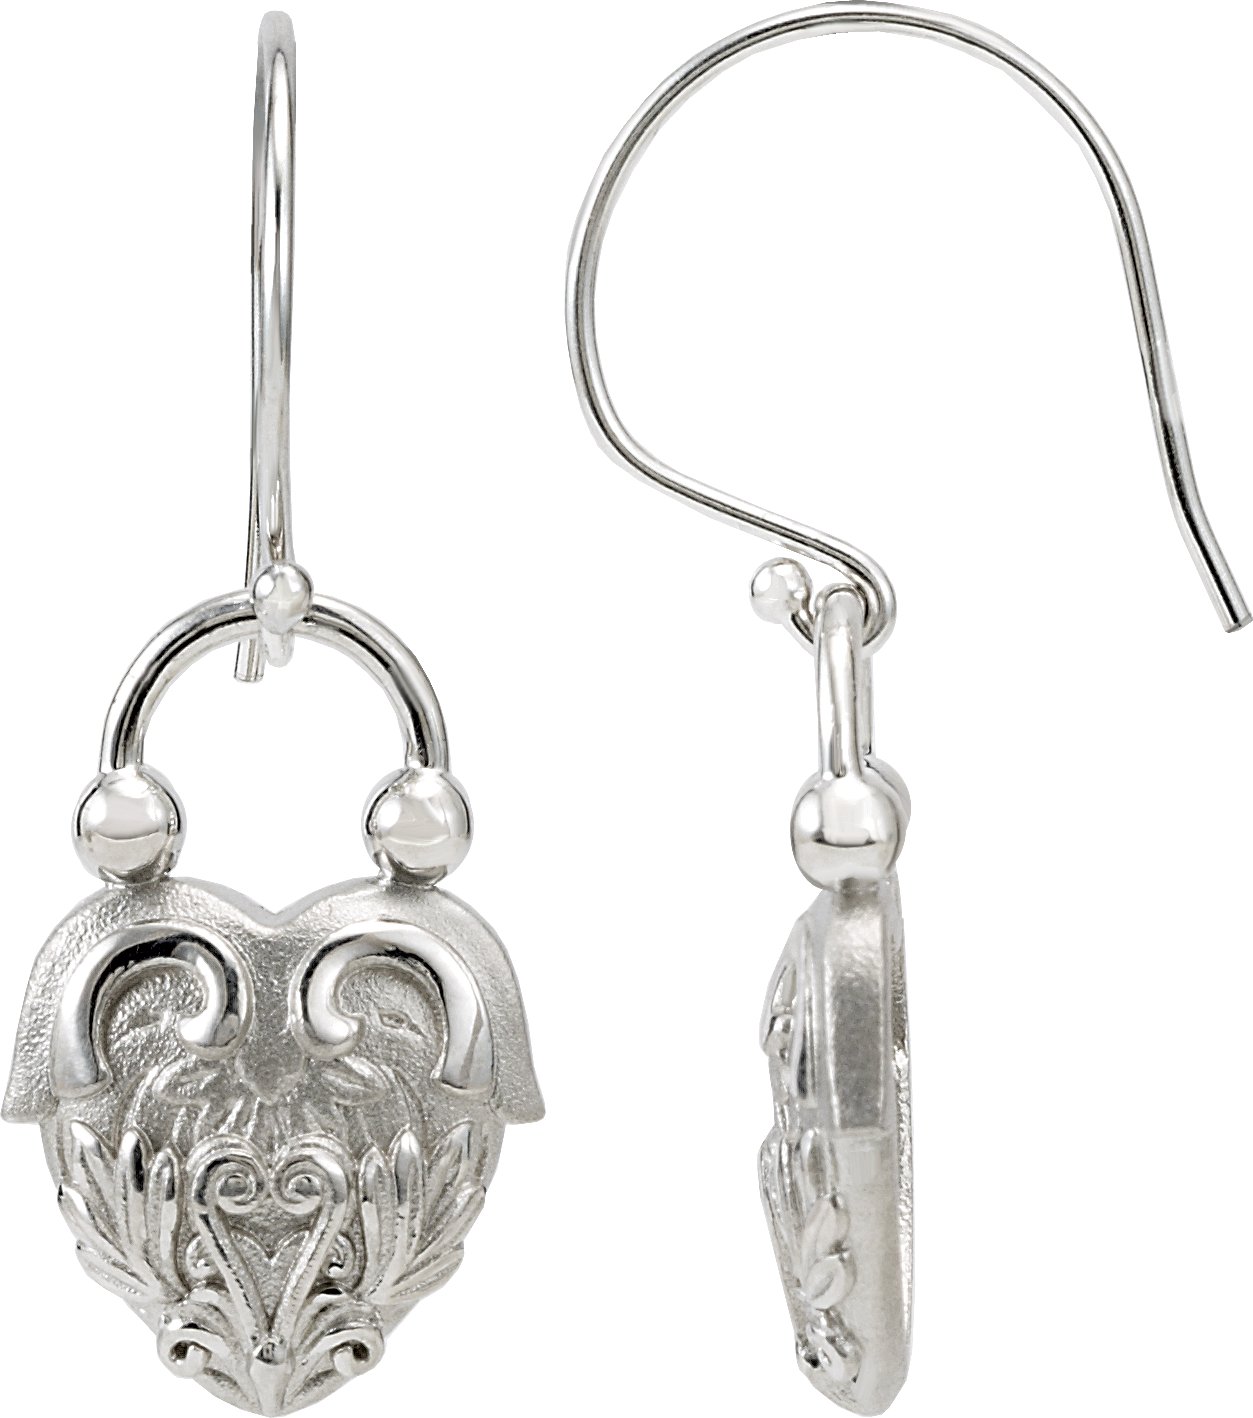 Sterling Silver Vintage-Inspired Heart Earrings